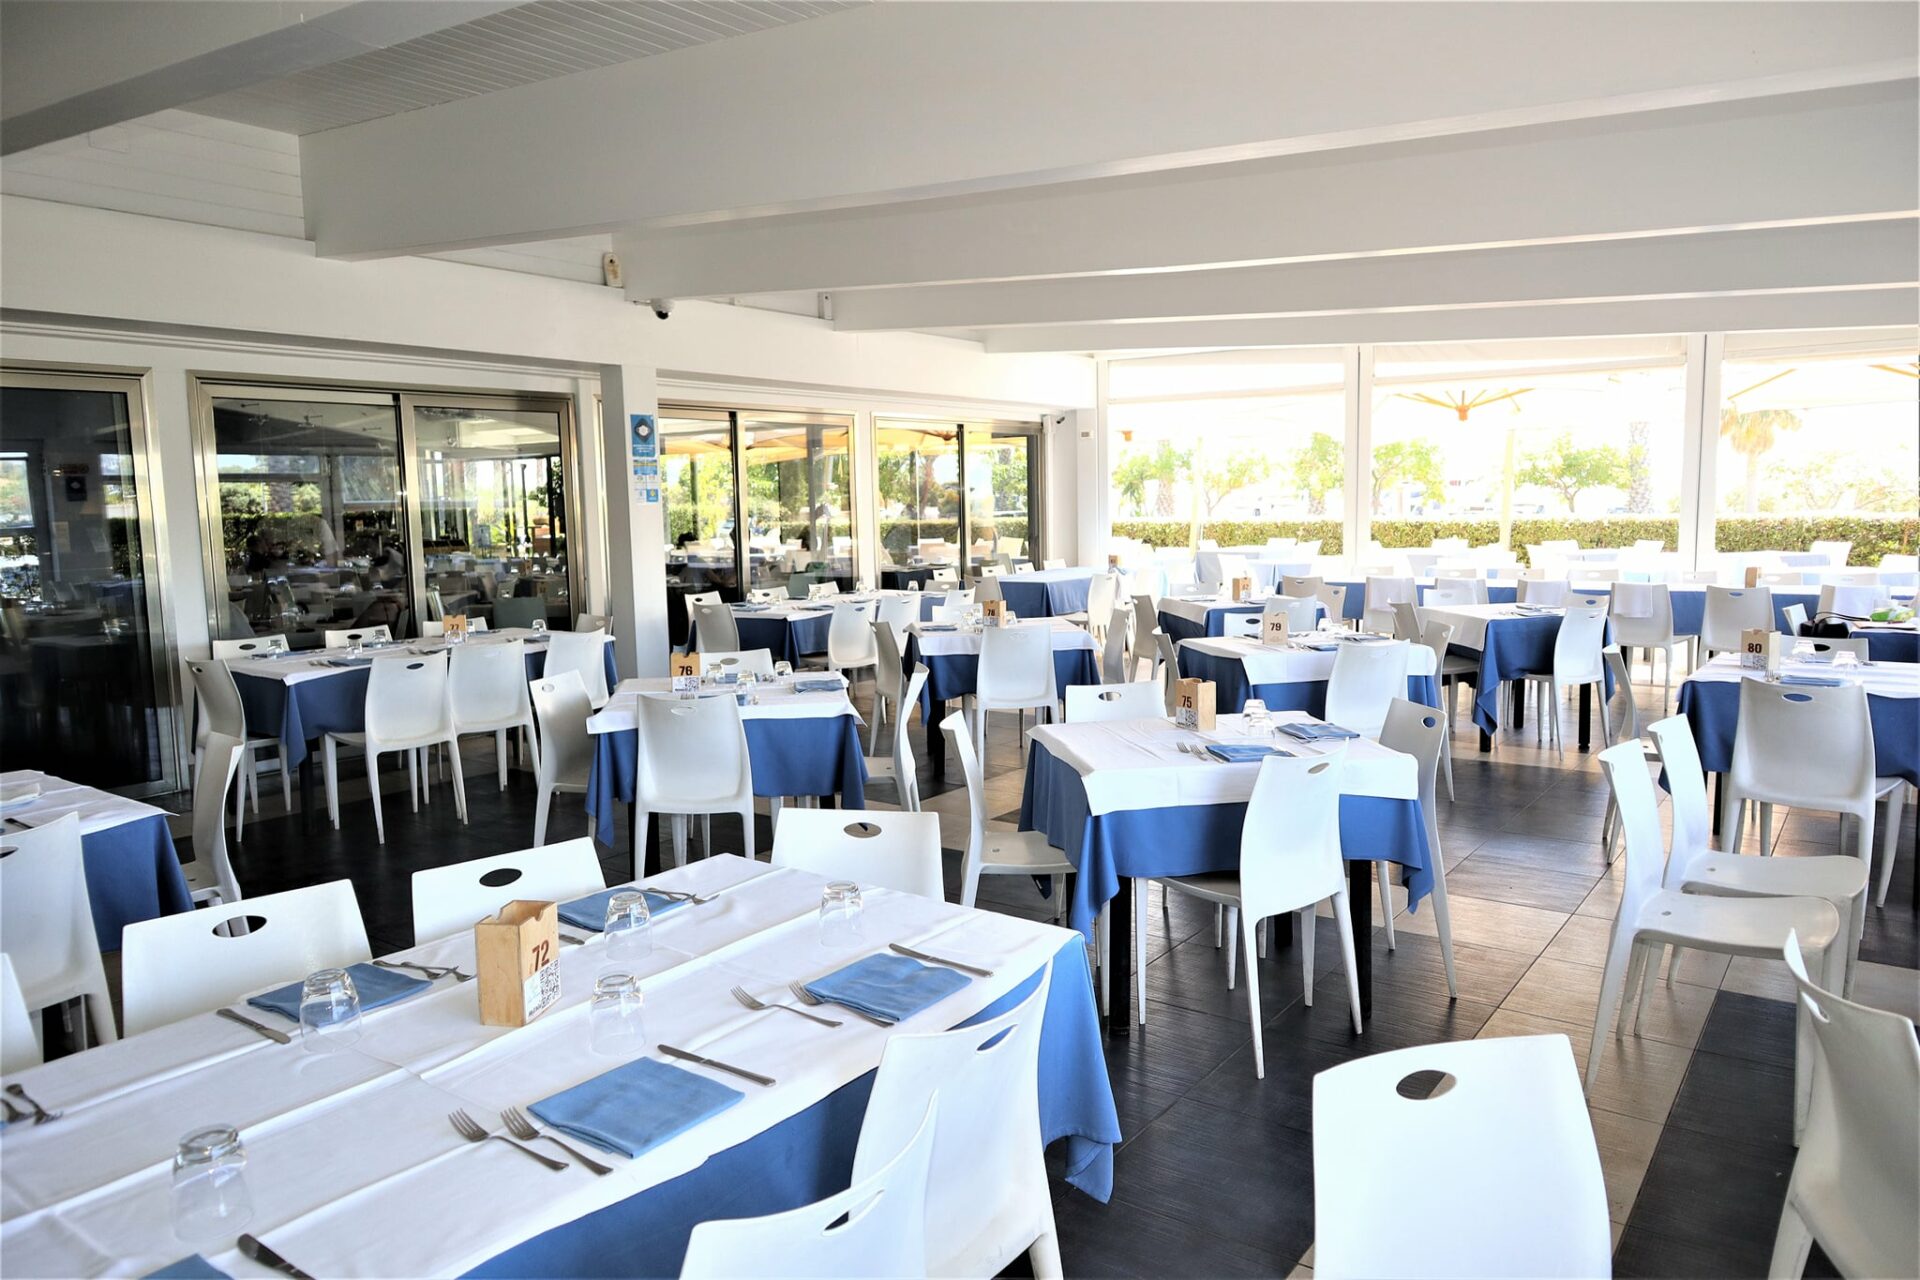 8 ristoranti dove mangiare bene a Marina di Ragusa, Marina di Ragusa, Ristorante La Falena, Interni, Arredamento